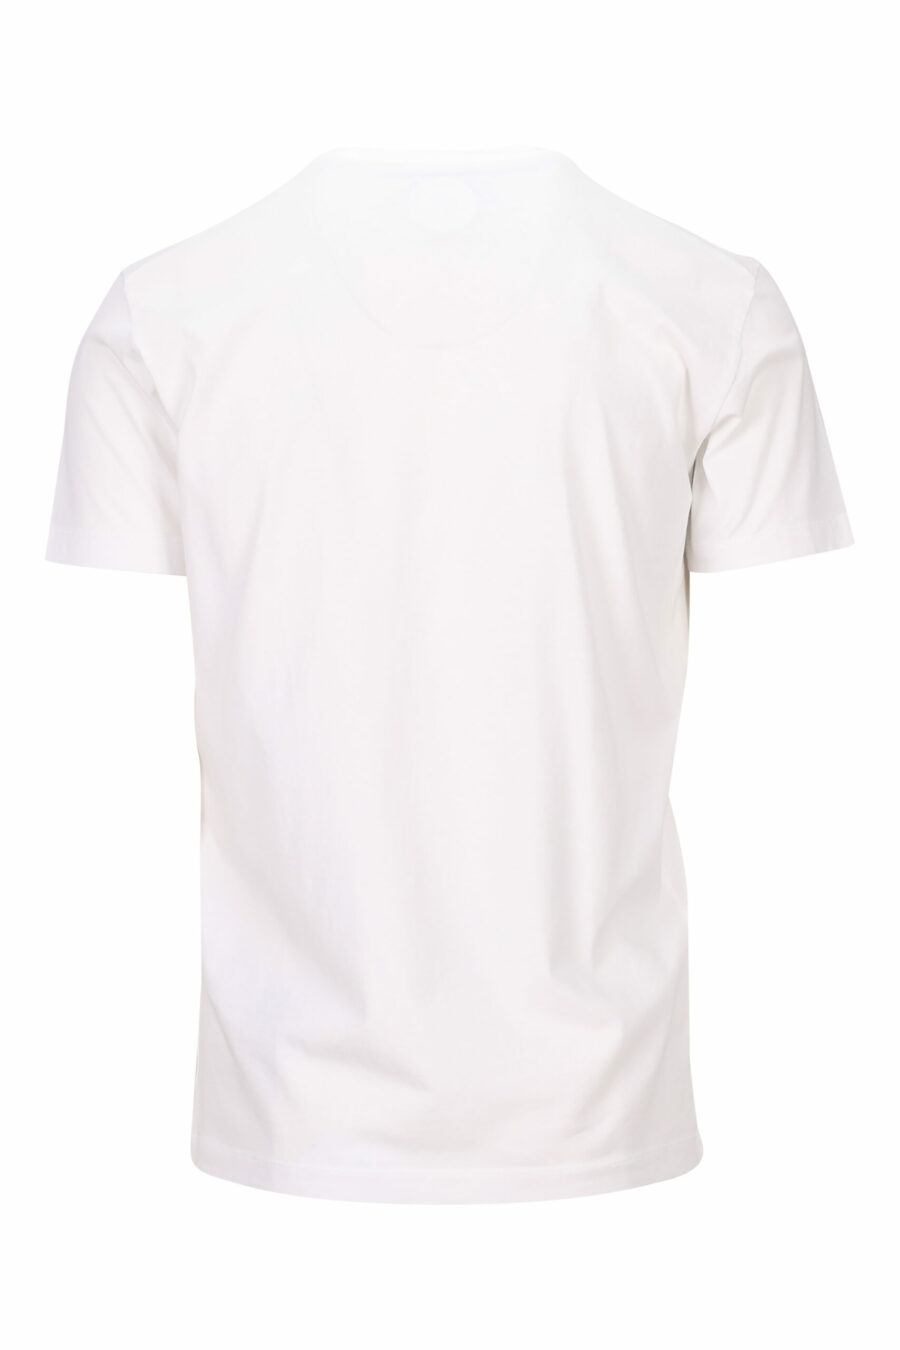 T-shirt branca com maxilogo "ceresio 9, milano" - 8054148504779 1 scaled